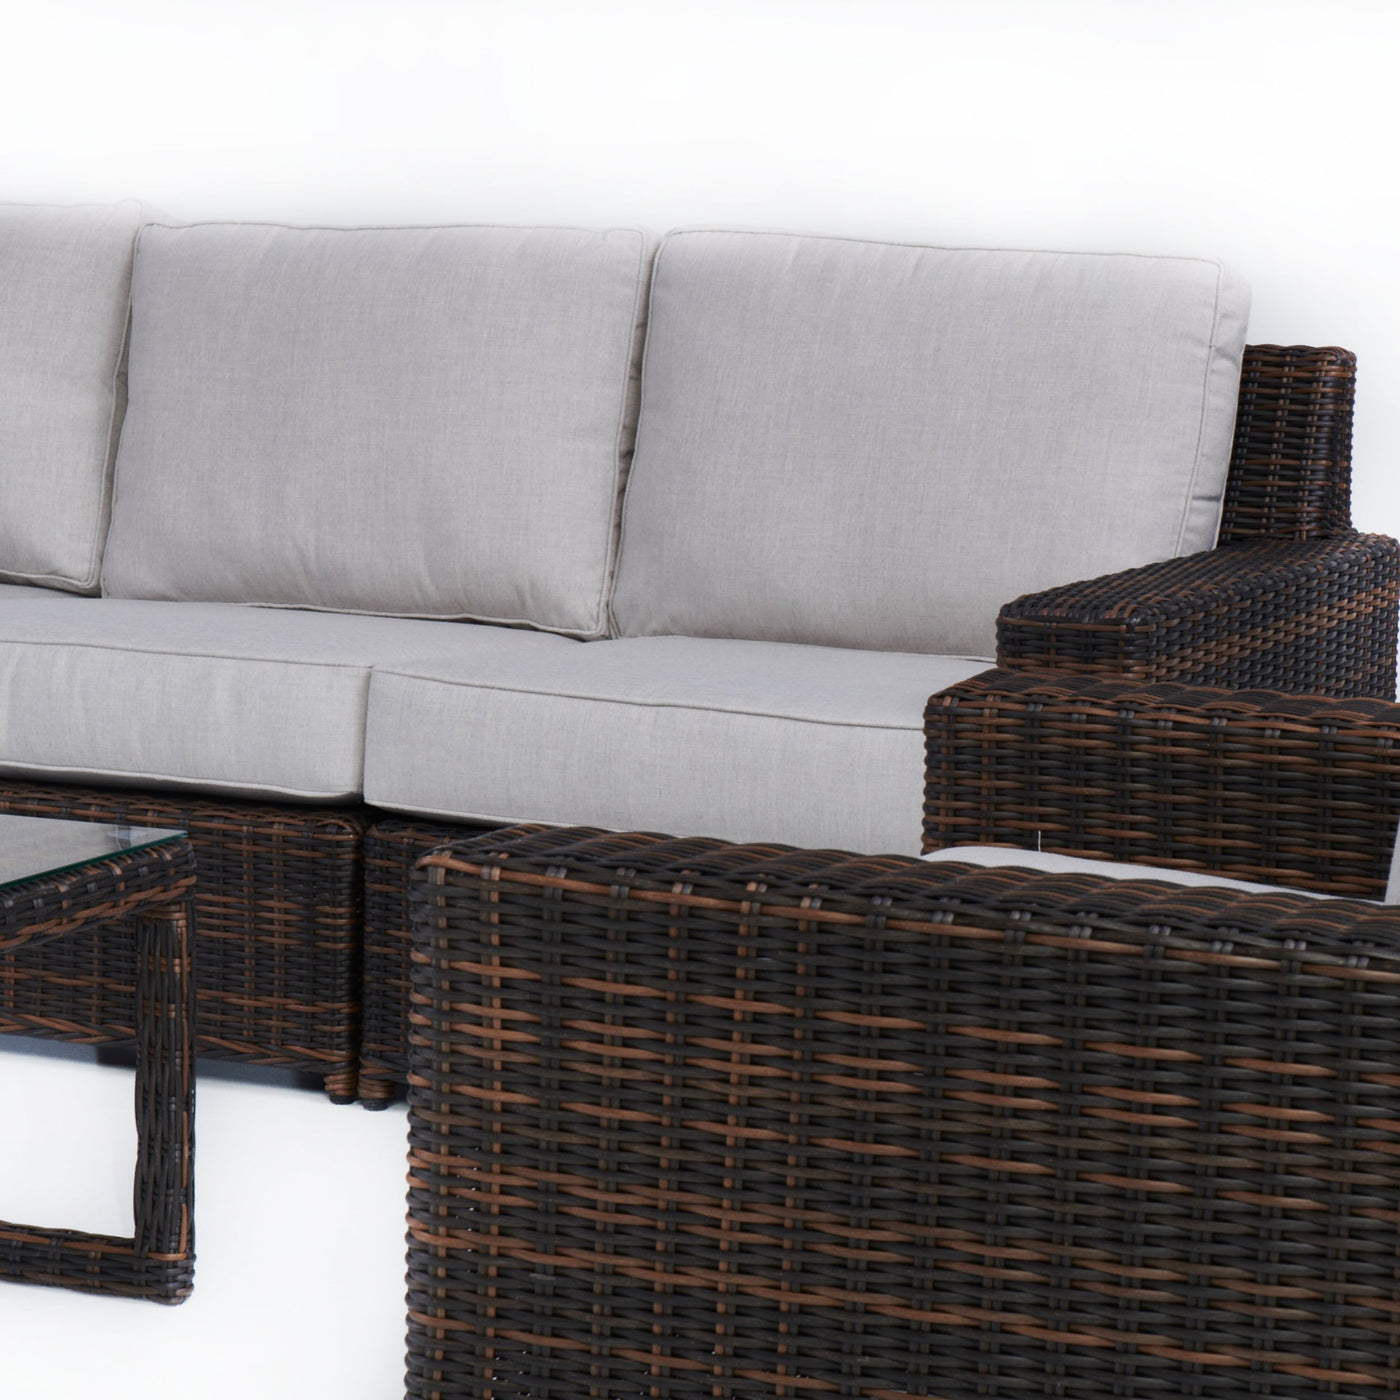  Yardbird Langdon Outdoor Sofa set with Fixed Chairs Outdoor Furniture